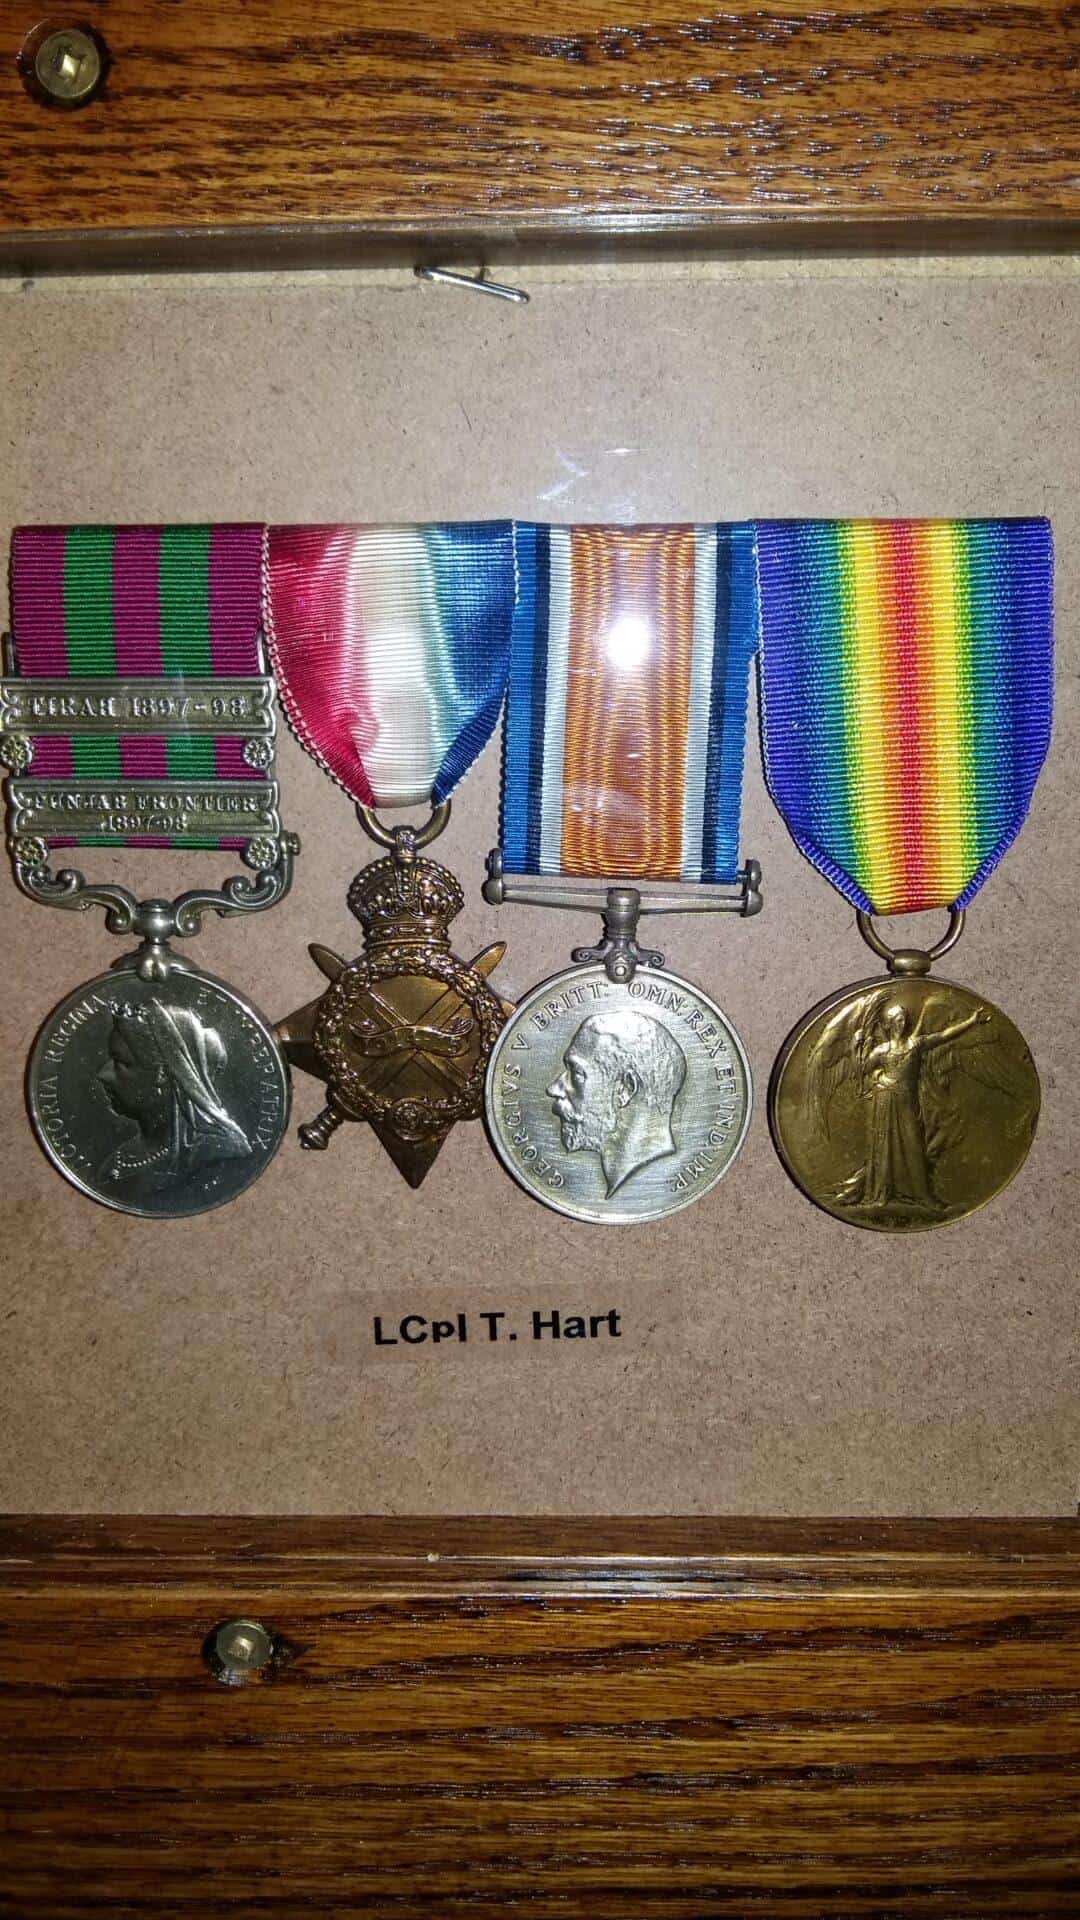 LCpl T. Hart medals